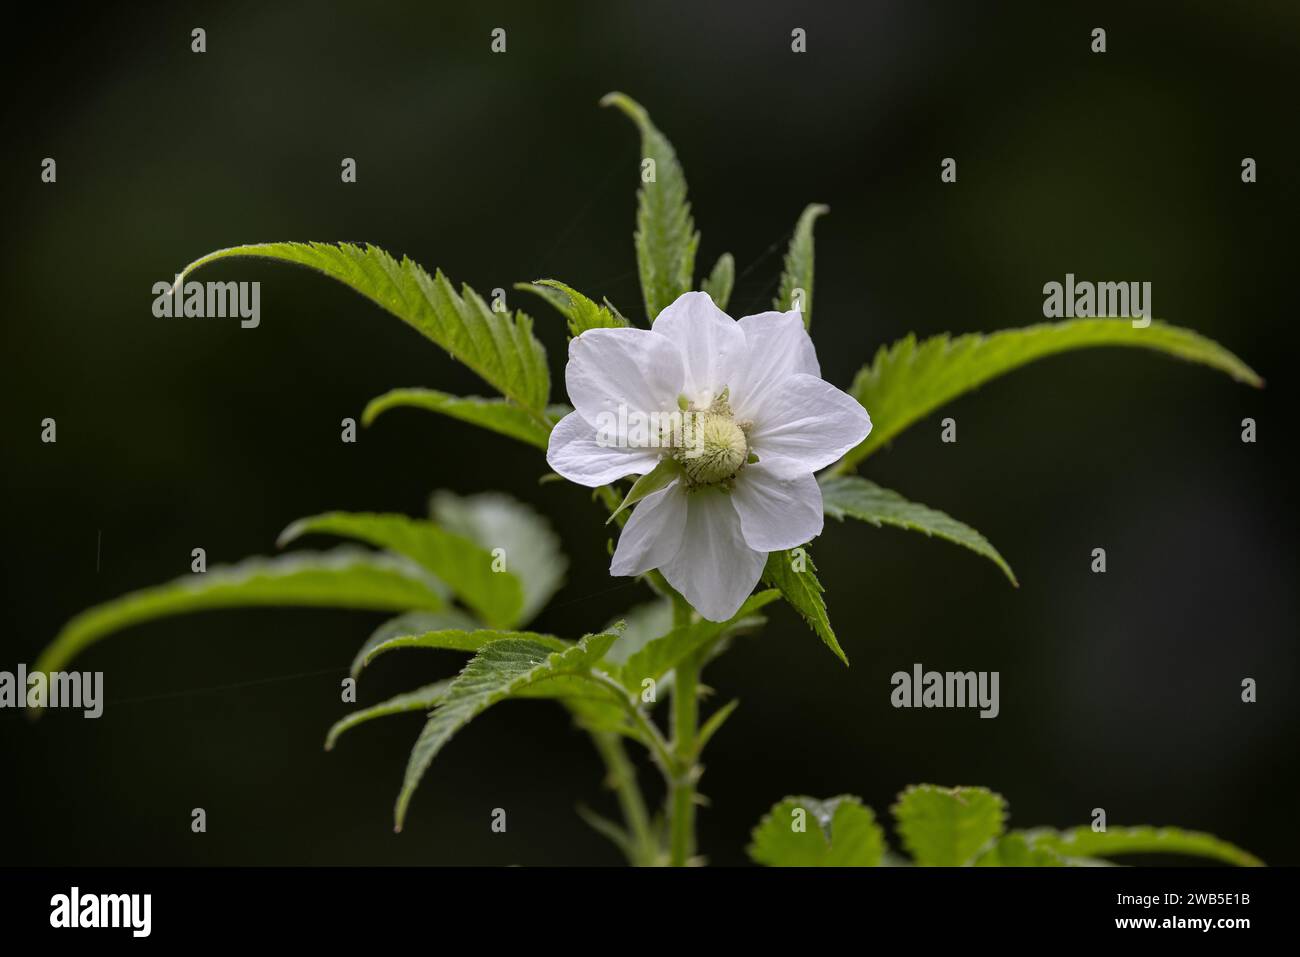 Australian native Raspberry plant in flower Stock Photo